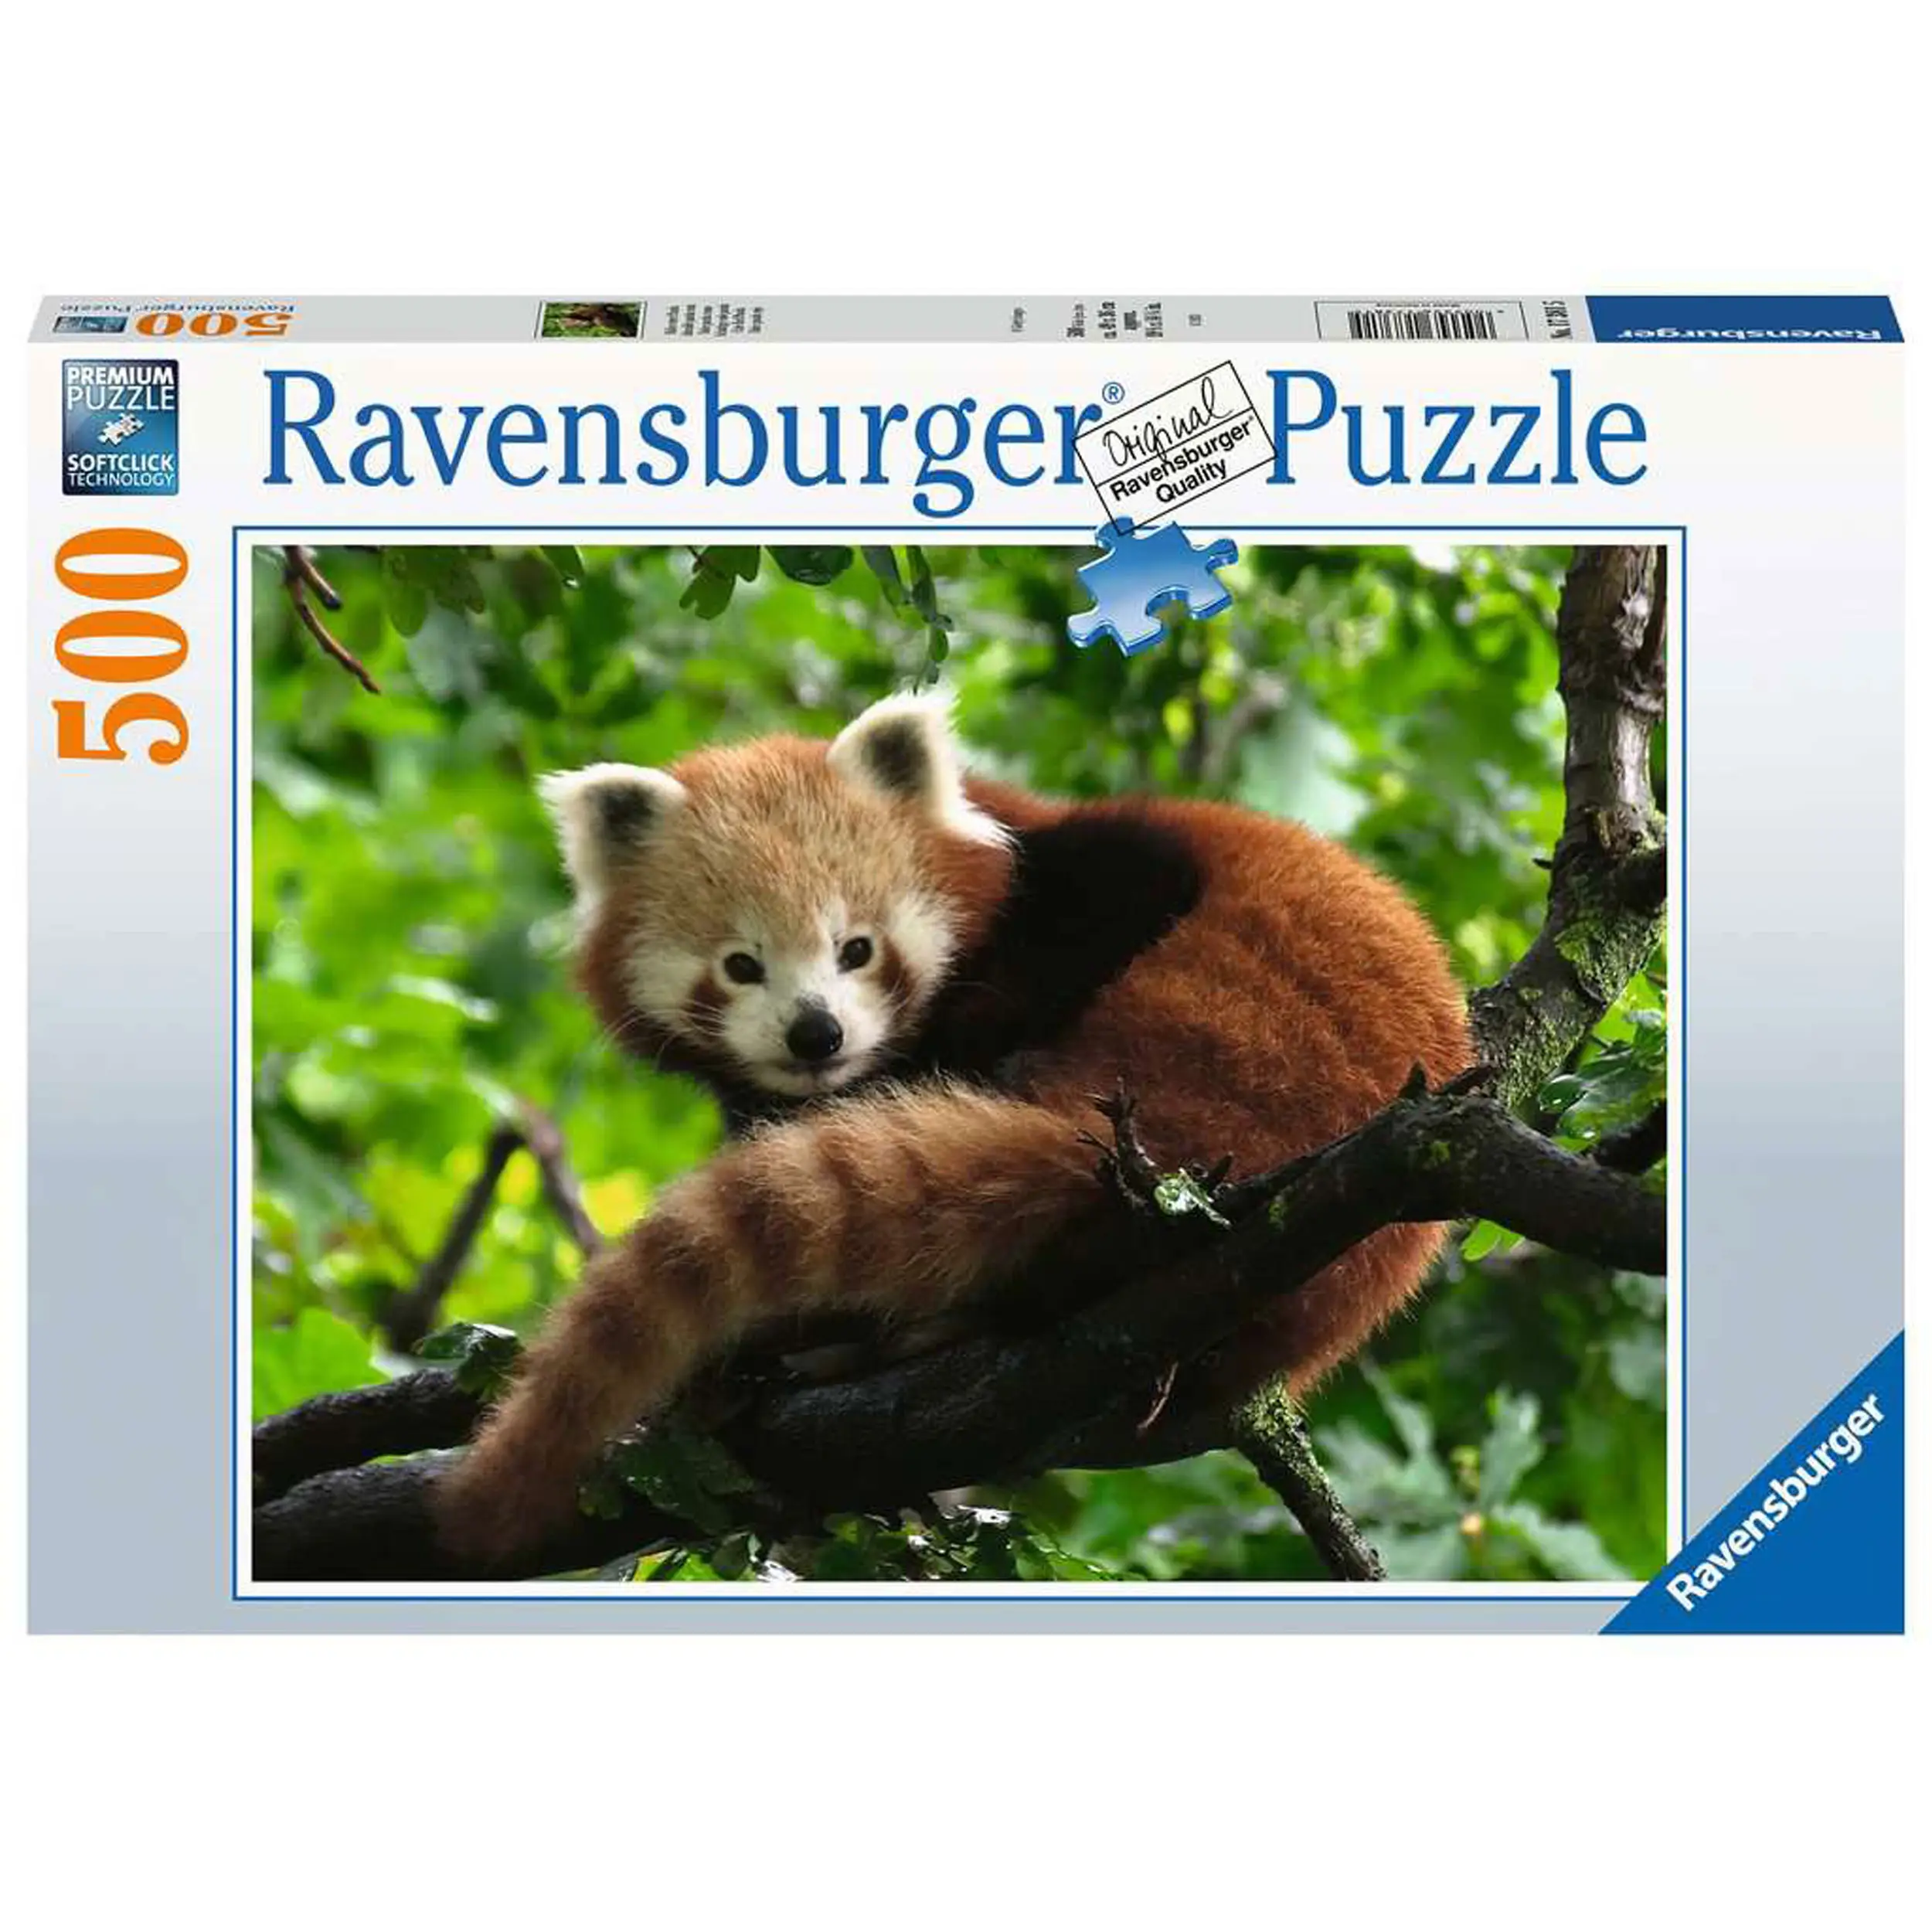 Puzzle S眉脽er roter Panda